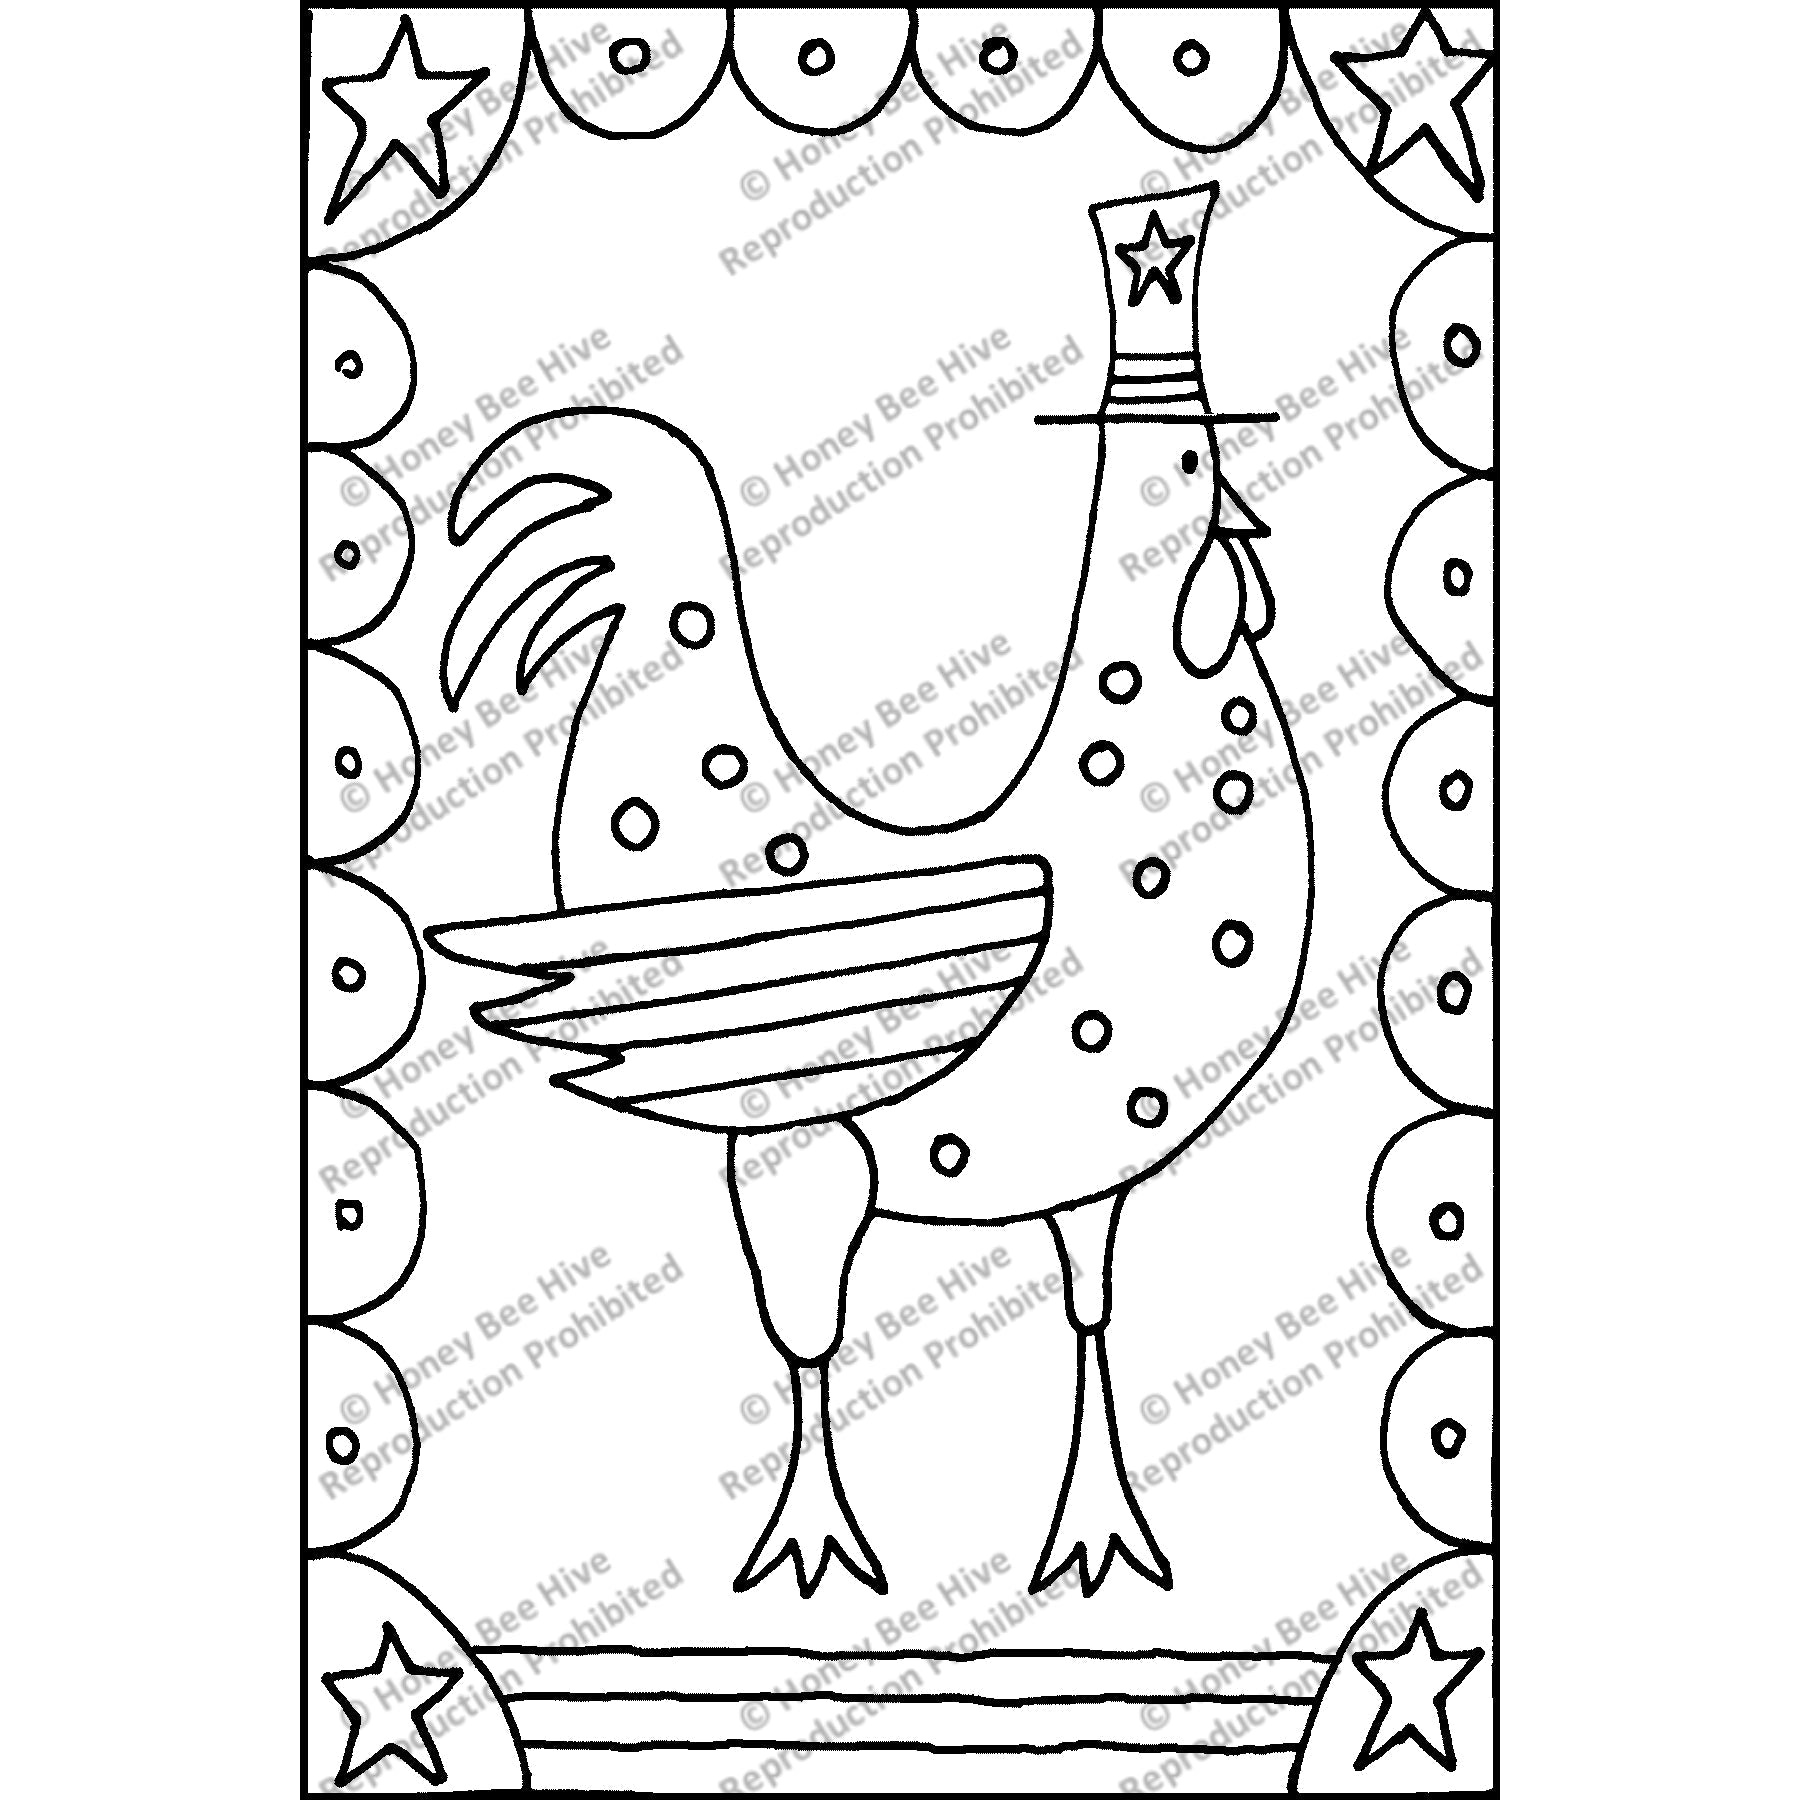 Cock-A-Doodle-Dandy, rug hooking pattern